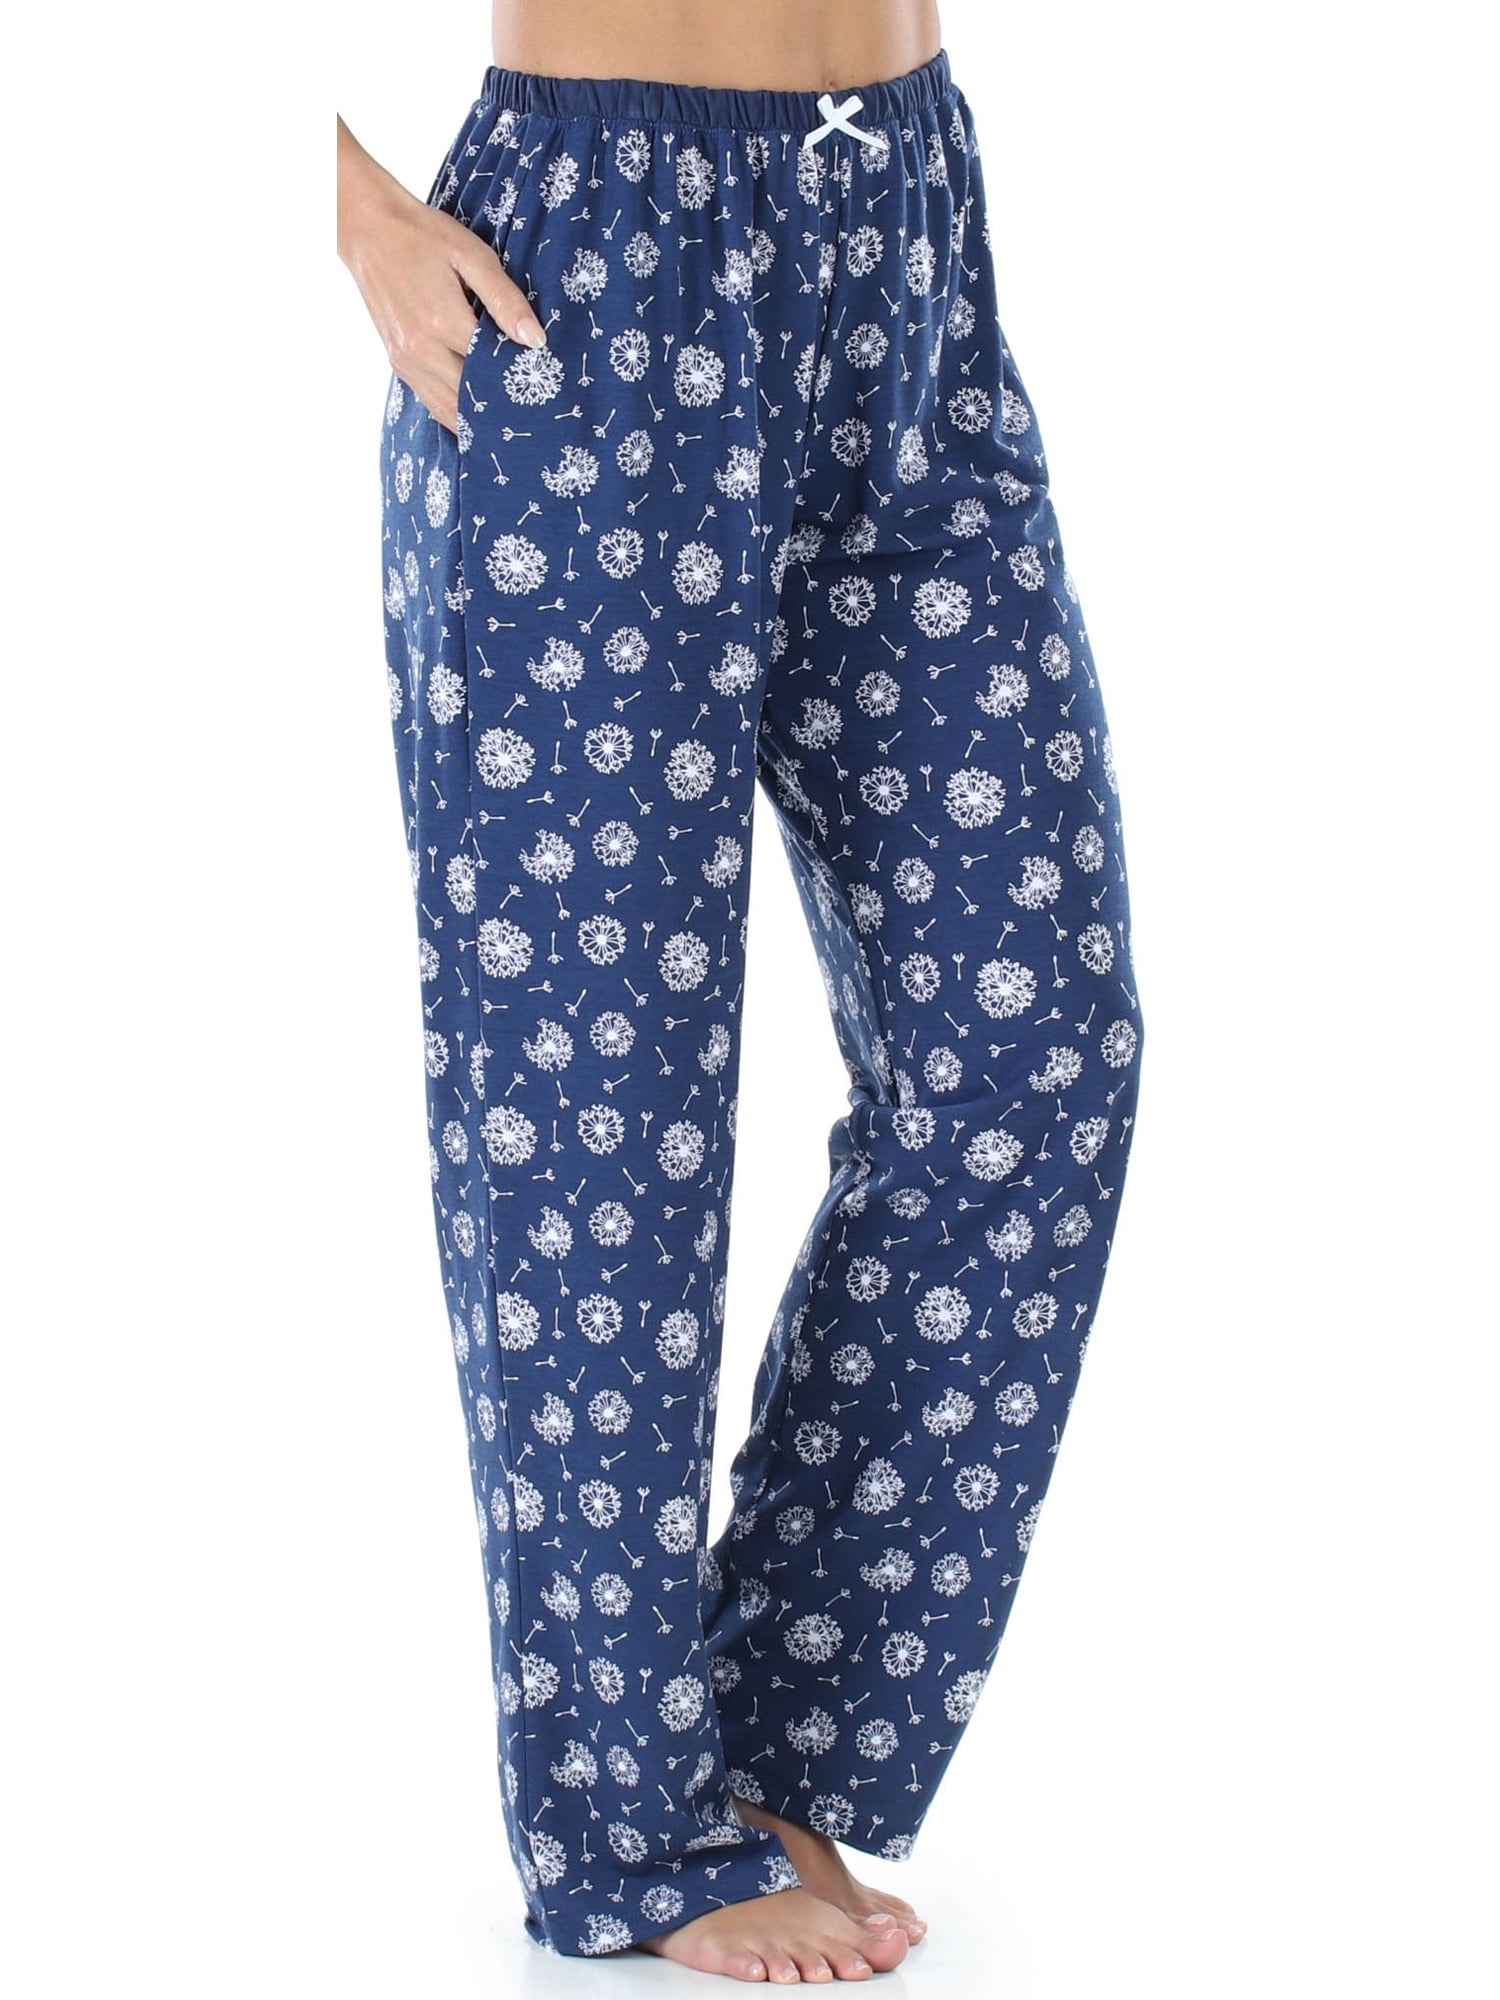 Sleepyhead - Sleepyheads Womenâs Jersey Lightweight Pajama Pants with Pockets - Walmart.com 